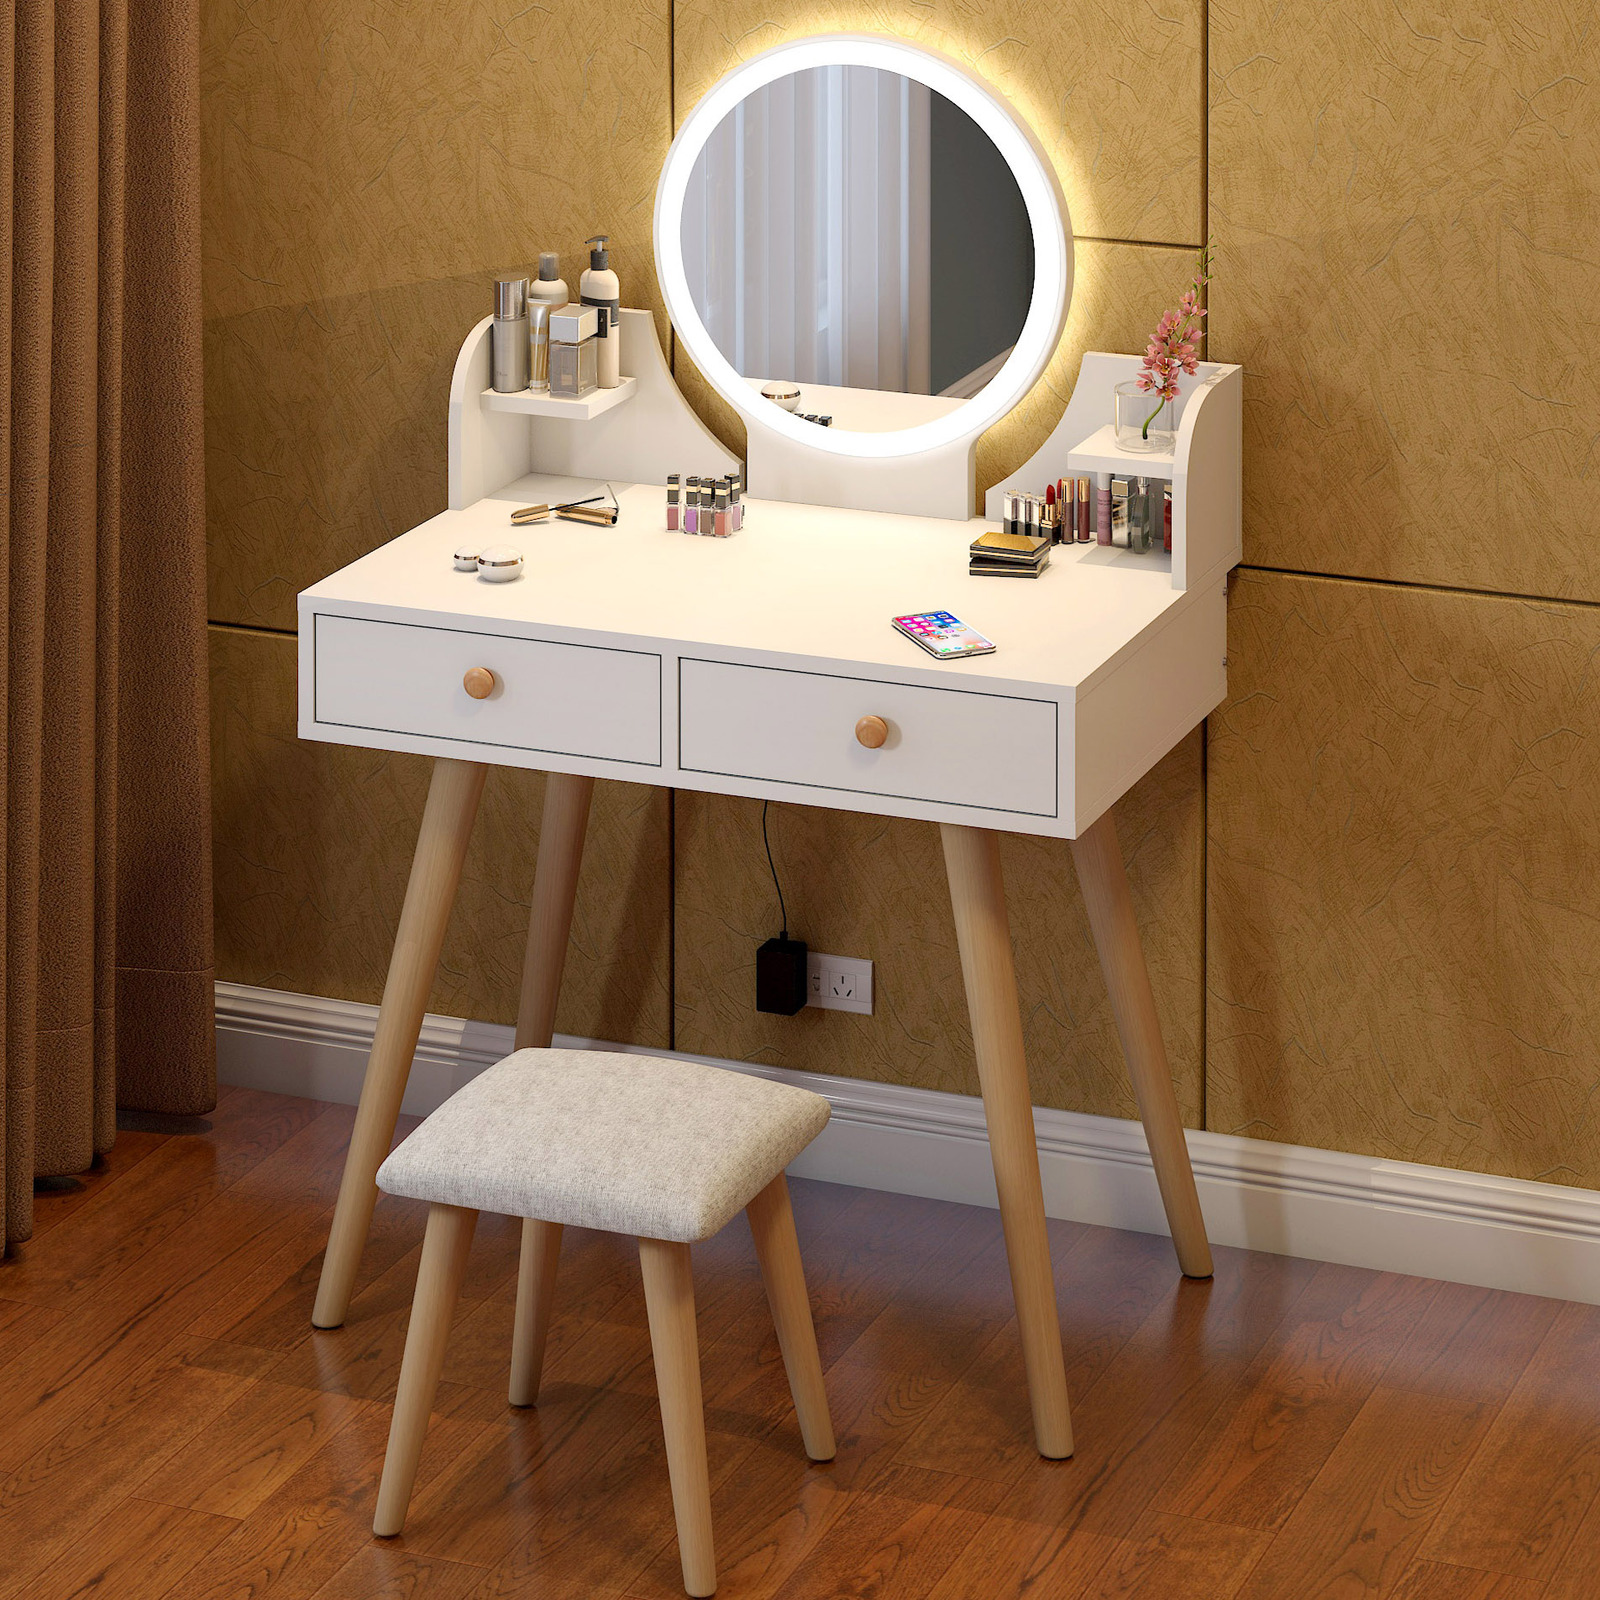 LED Luminous Princess Dresser Vanity Table with Mirror, Stool and Storage Drawers Set